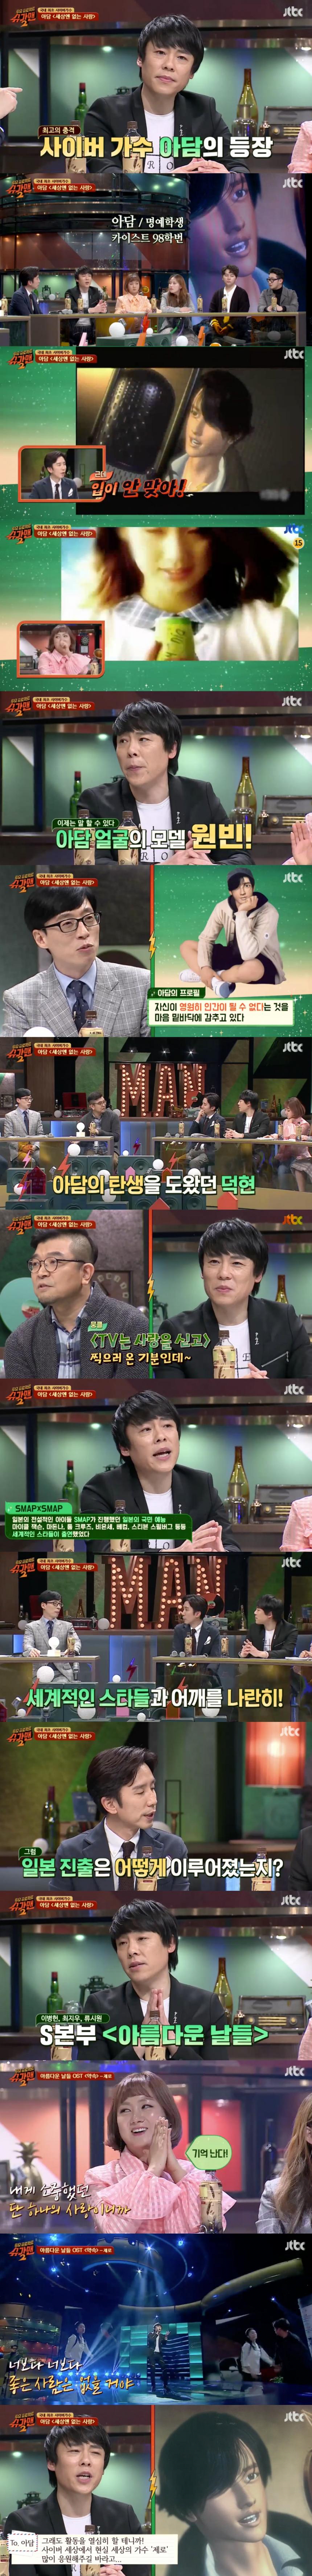 JTBC 슈가맨 시즌2 방송캡쳐